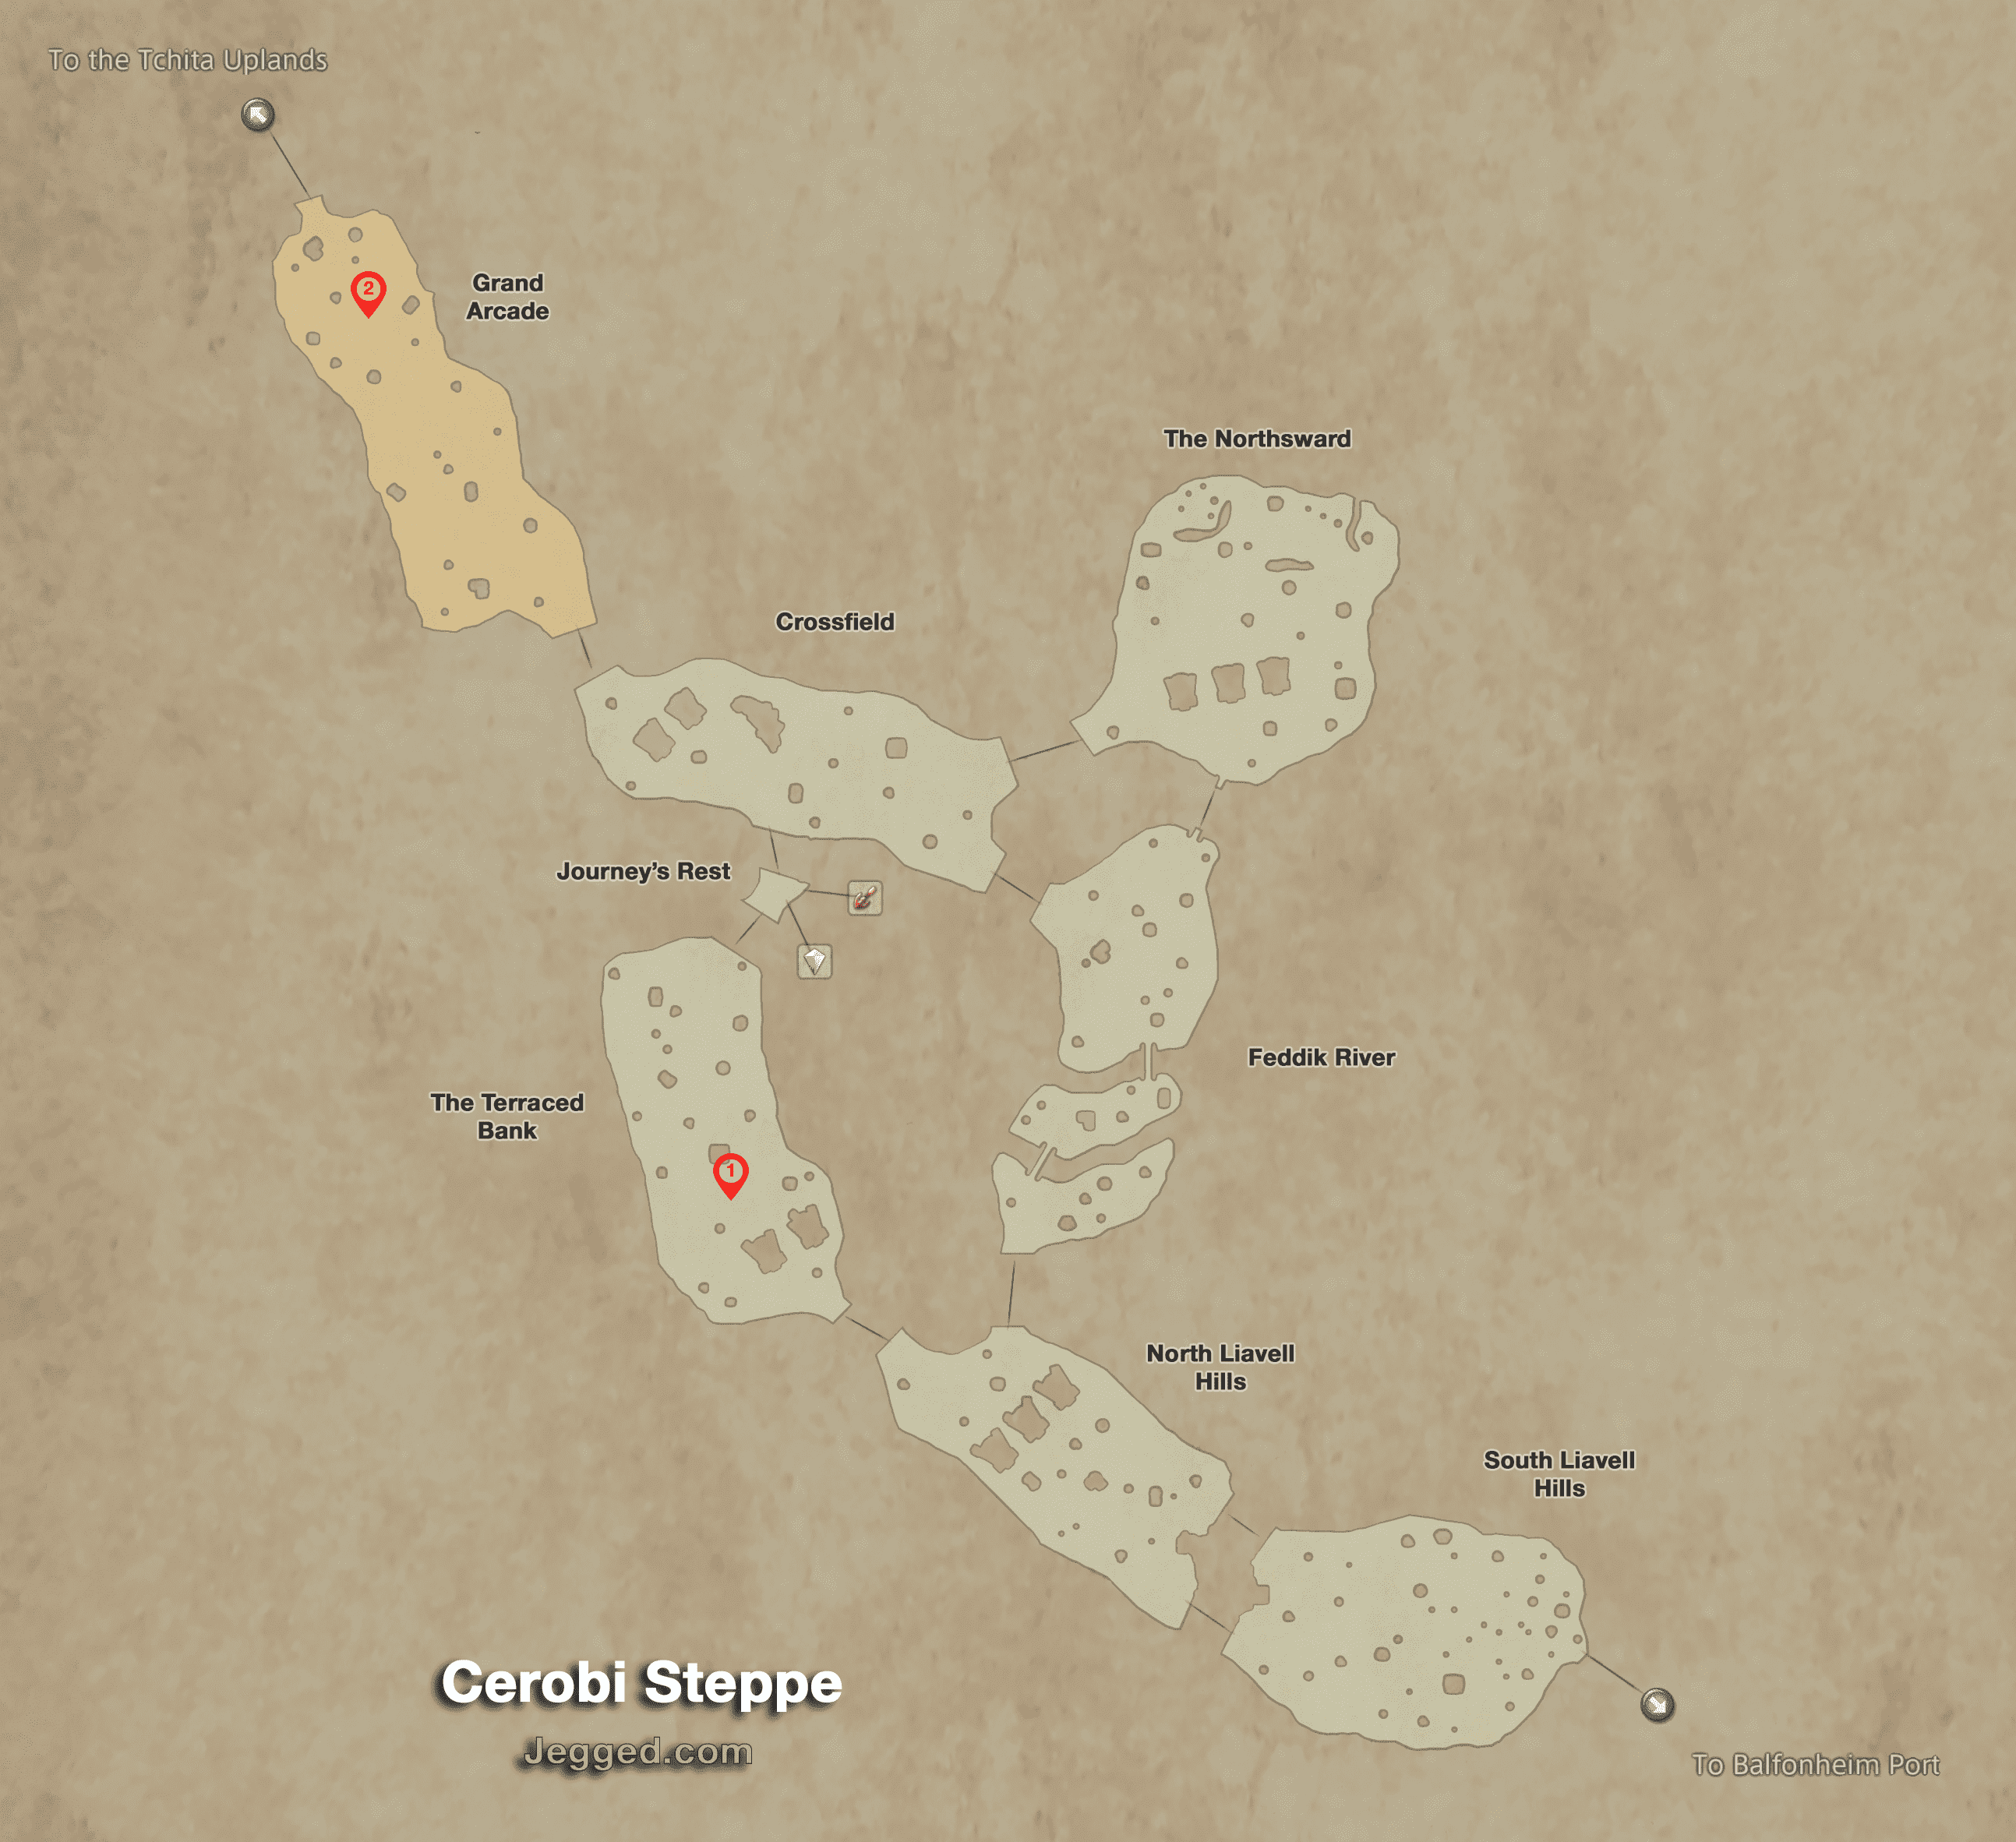 Map of the Cerobi Steppe